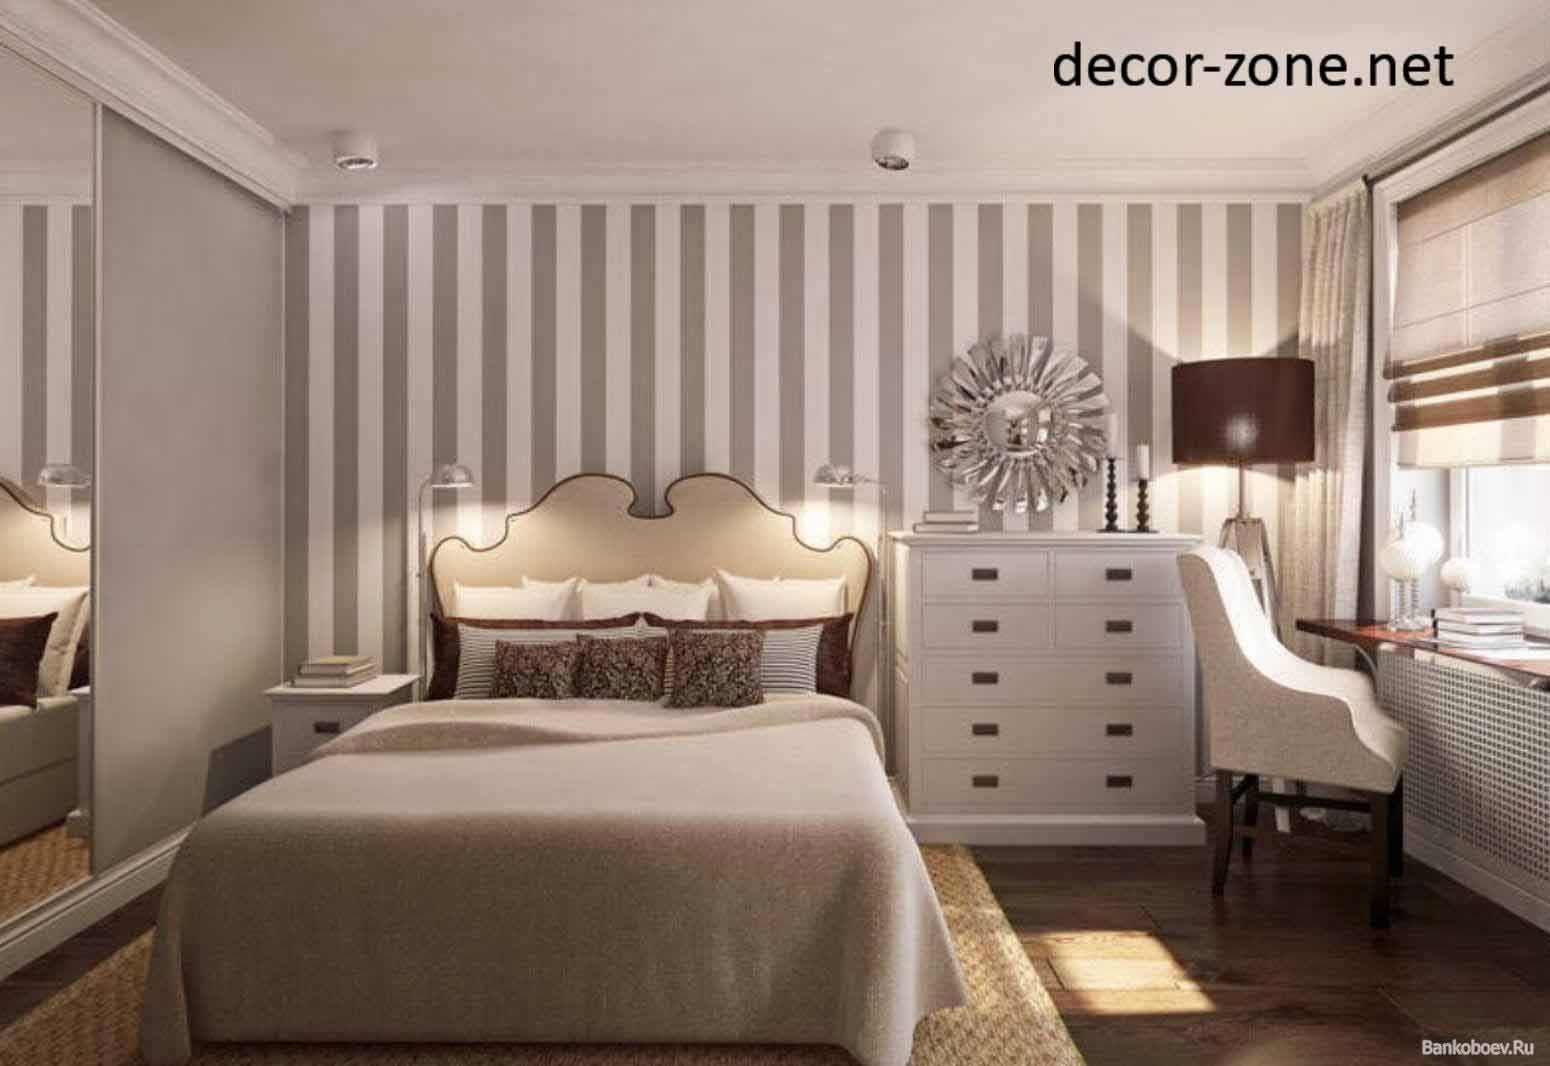 stripped bedroom wallpaper ideas, bedroom wall decor